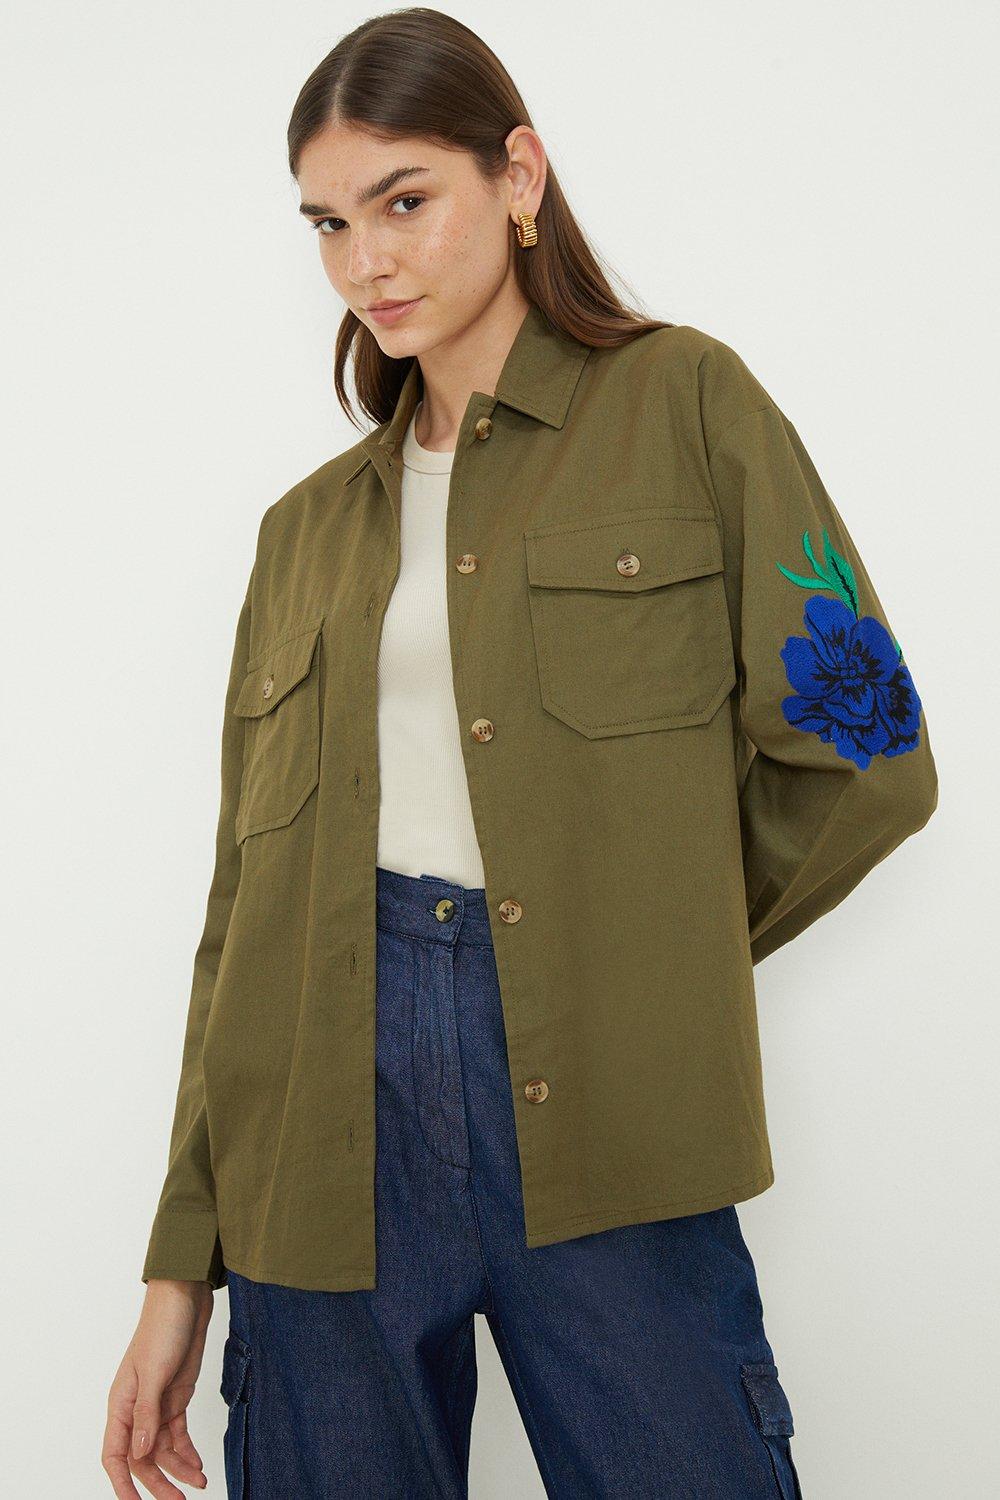 Women’s Embroidered Utility Pocket Long Sleeve Shirt - khaki - 16